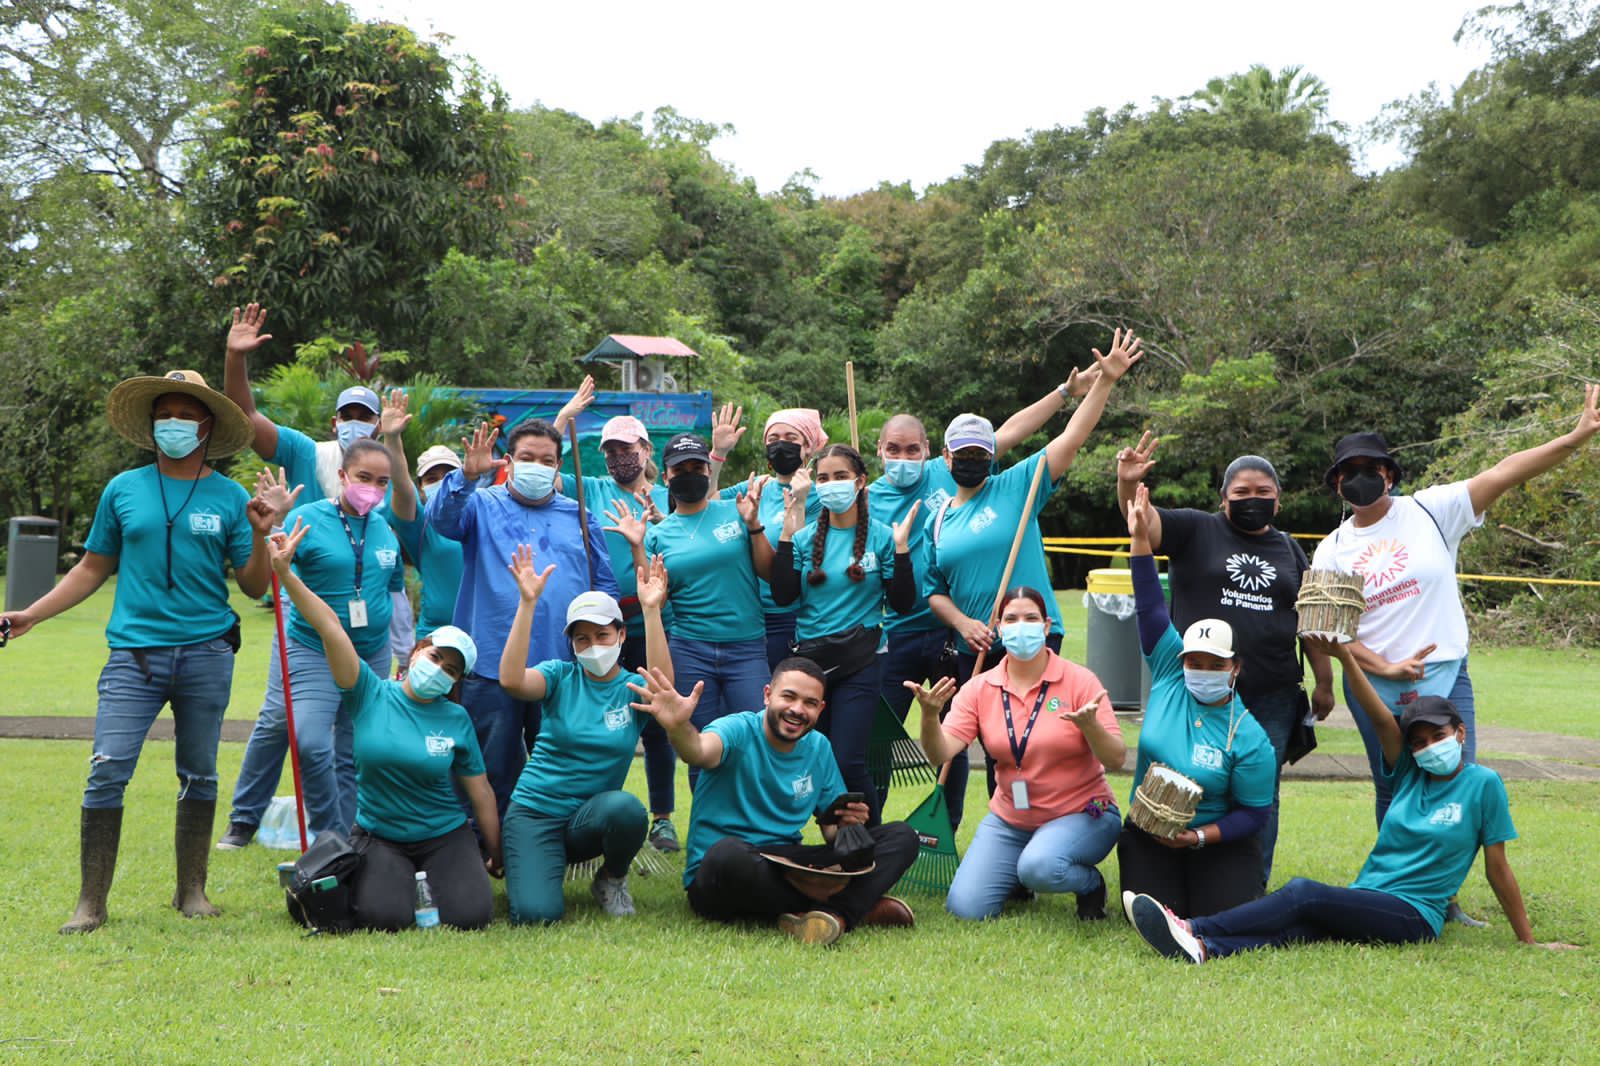 Panama state tv volunteers posing in teal t-shirts